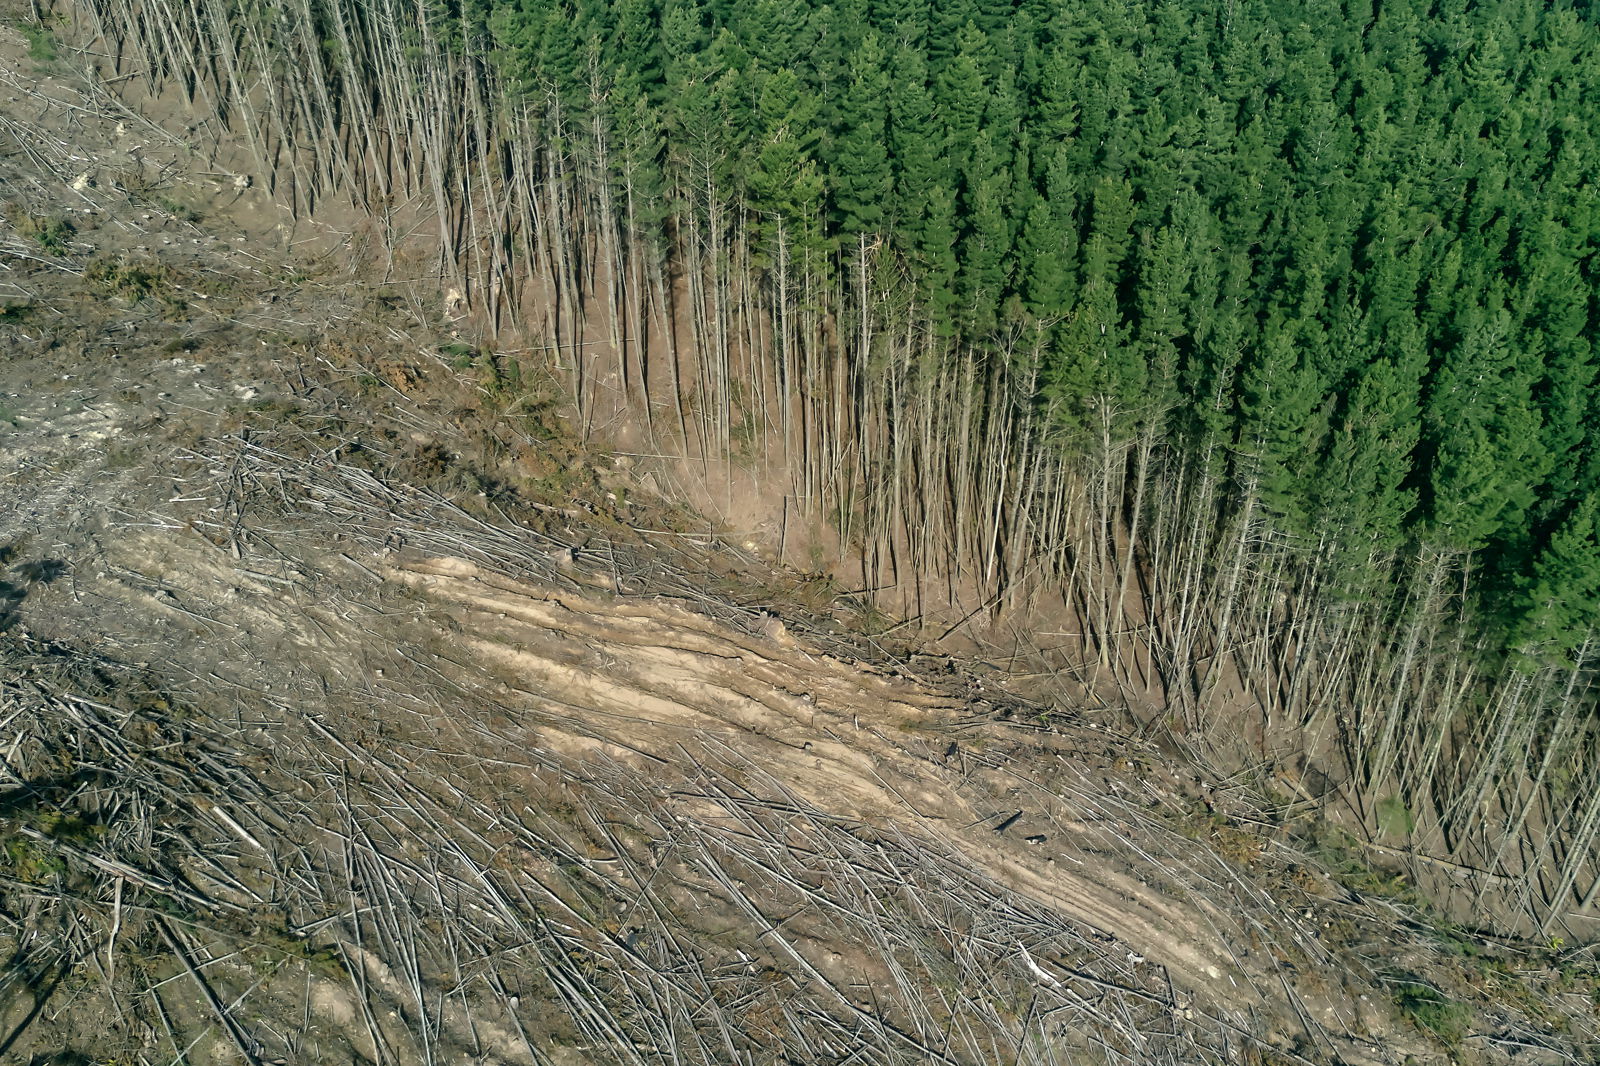 illustration of the impact of deforestation